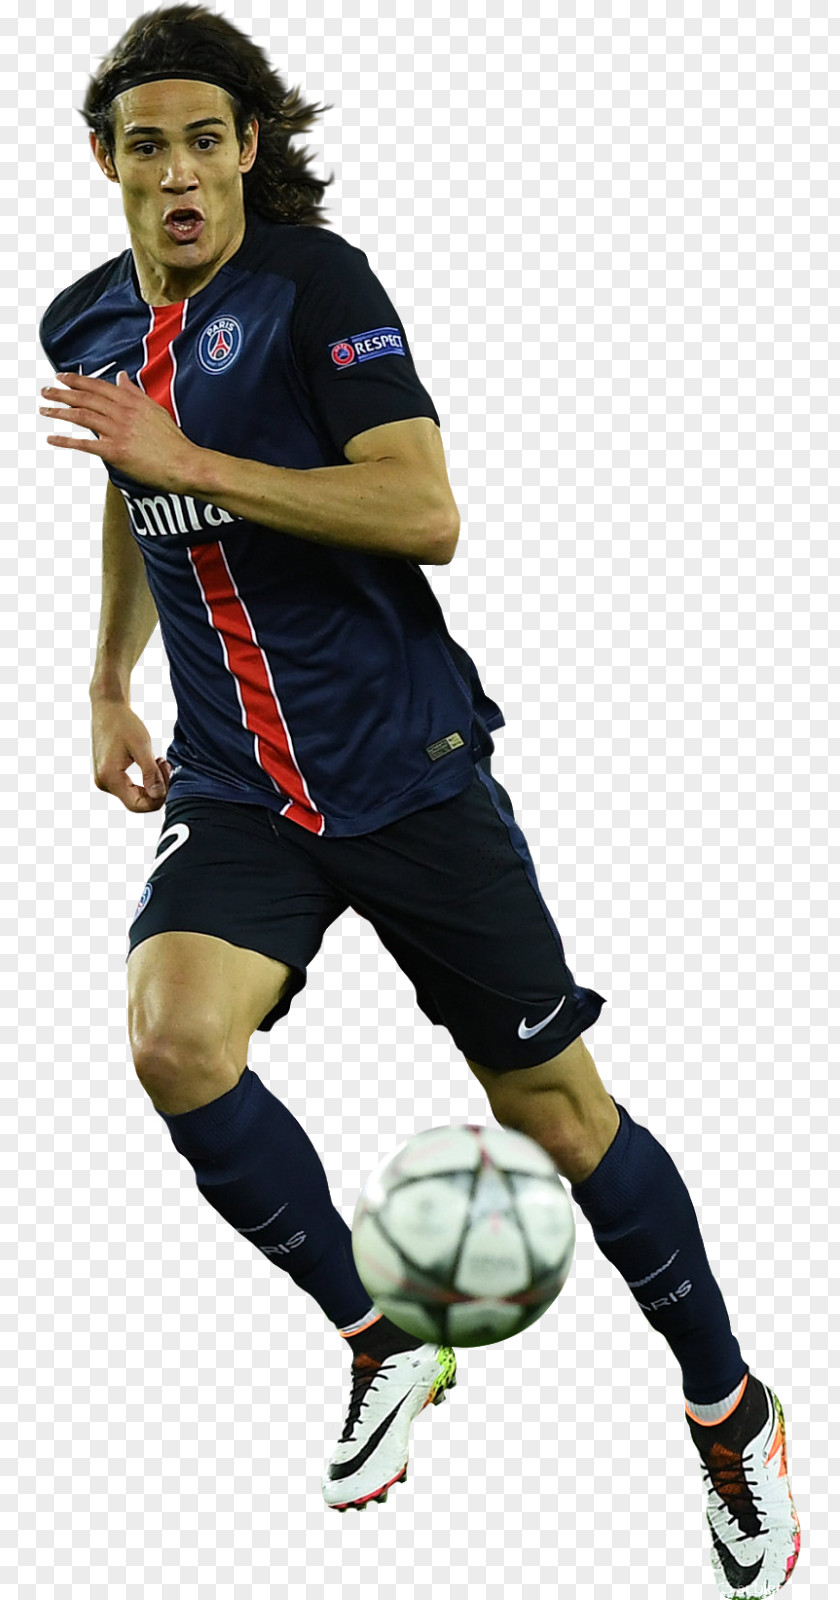 Moscu Edinson Cavani Soccer Player Paris Saint-Germain F.C. Ball Team Sport PNG